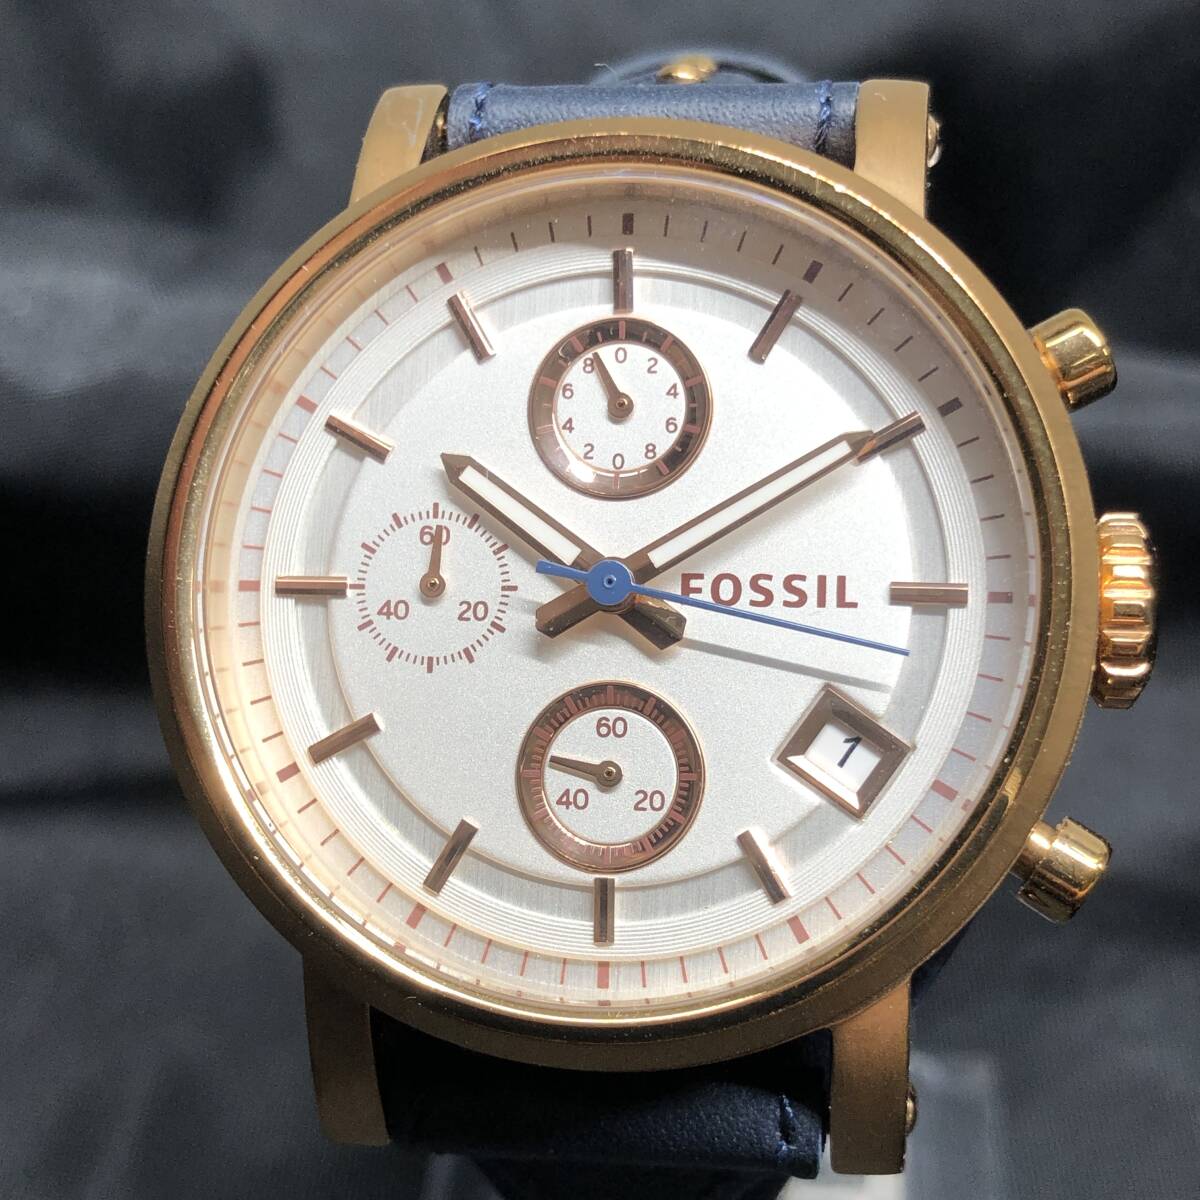 FOSSIL Fossil оригинал The Boy Friend хронограф кожа часы голубой кварц наручные часы Date 3 стрелки 24d.MZ